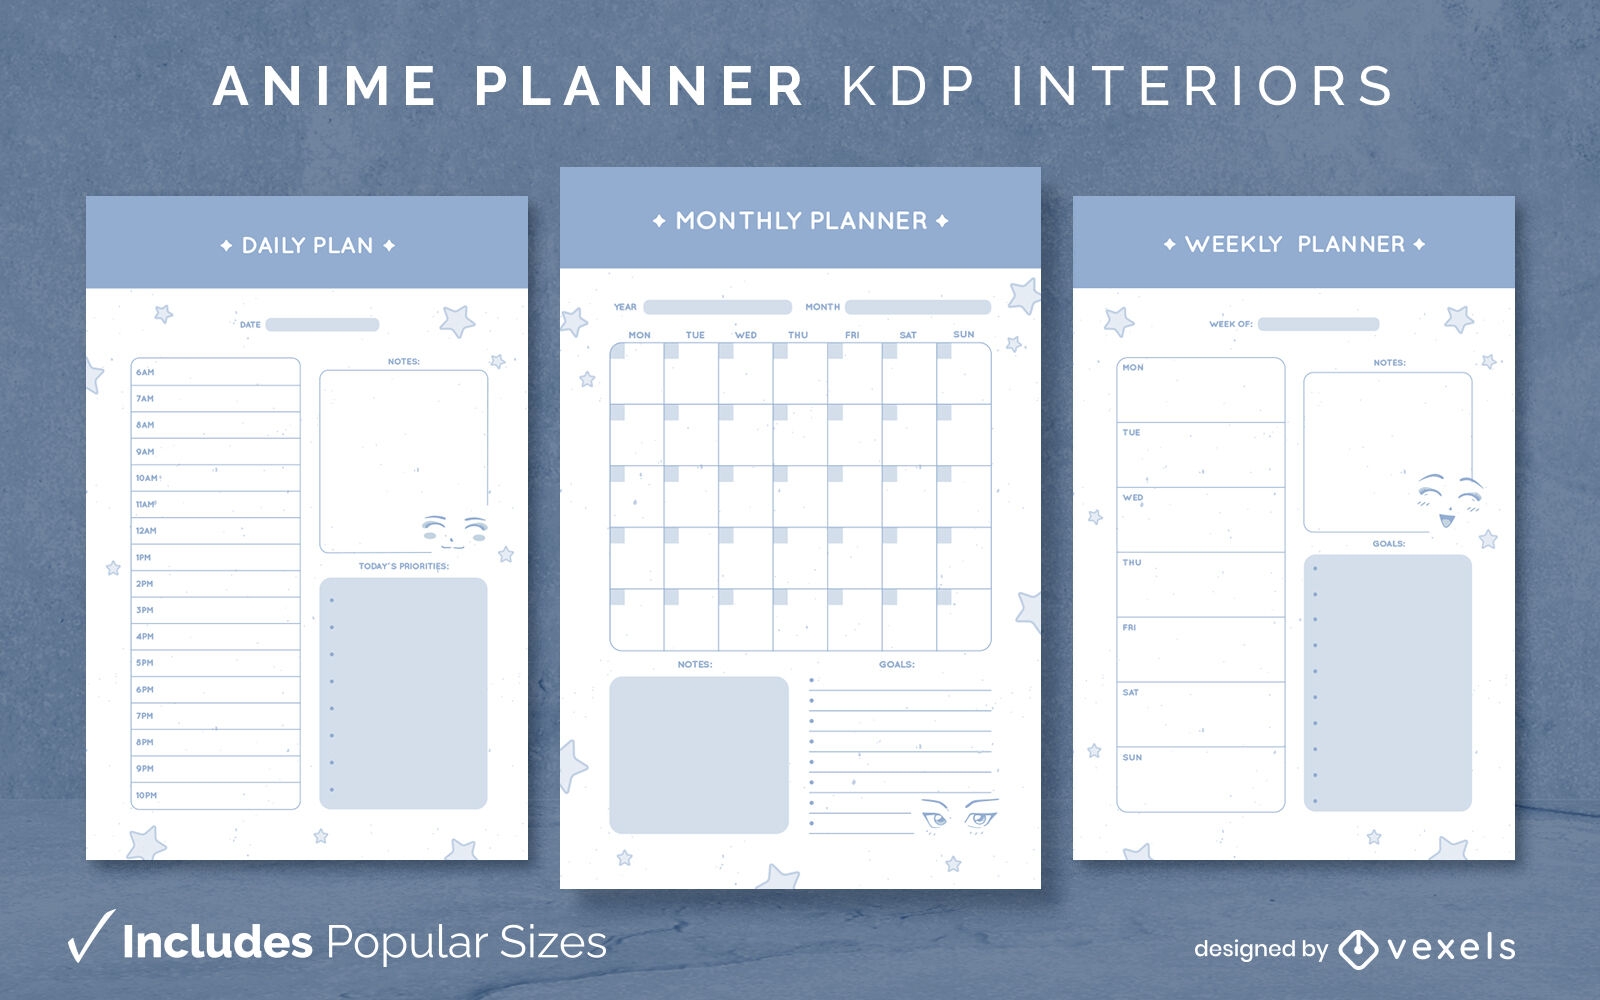 Anime planner diary design template KDP